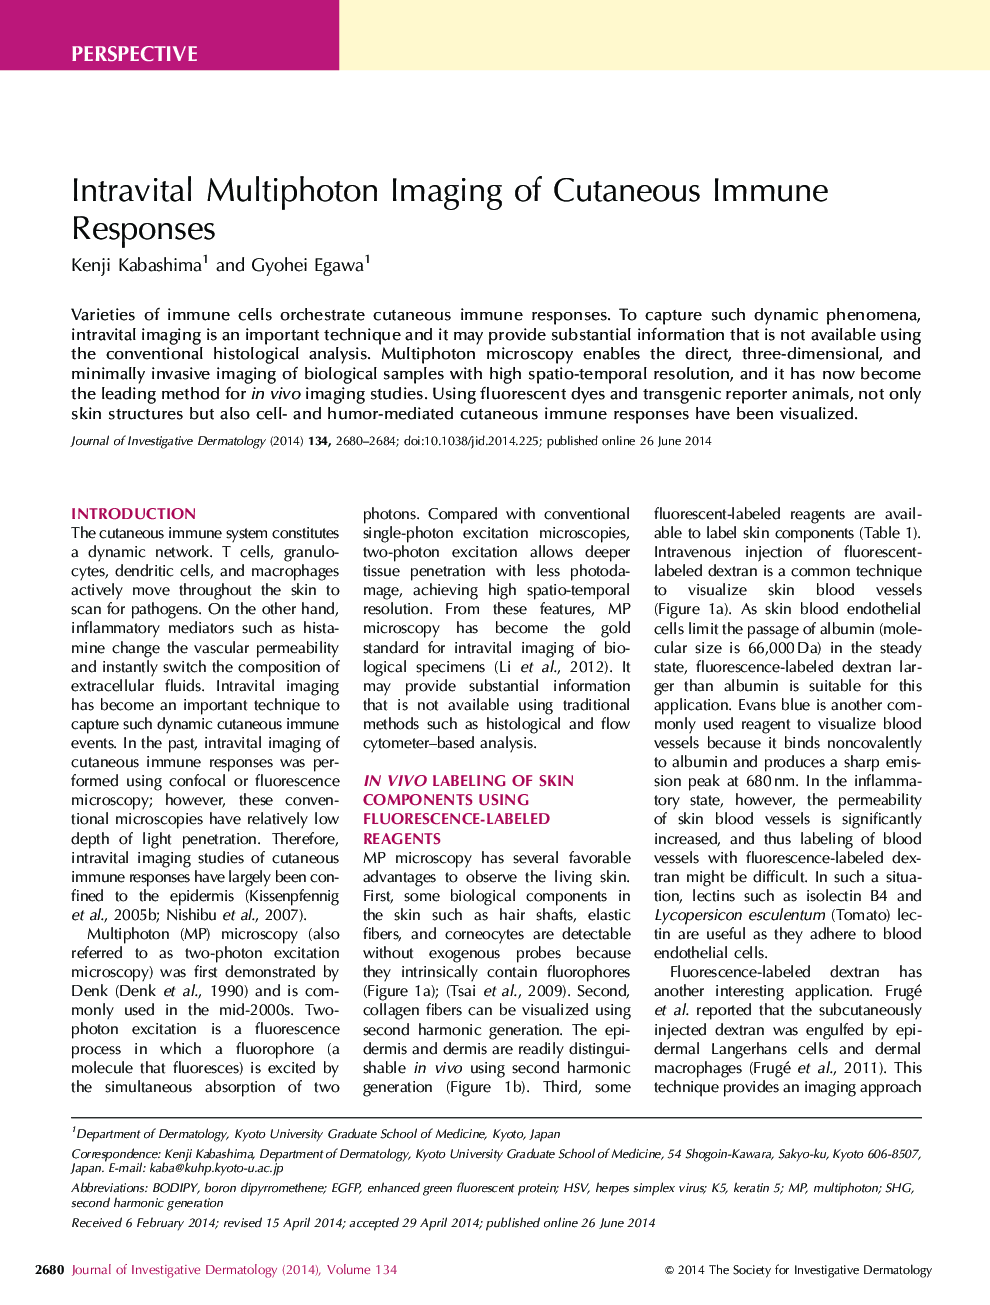 Intravital Multiphoton Imaging of Cutaneous Immune Responses 